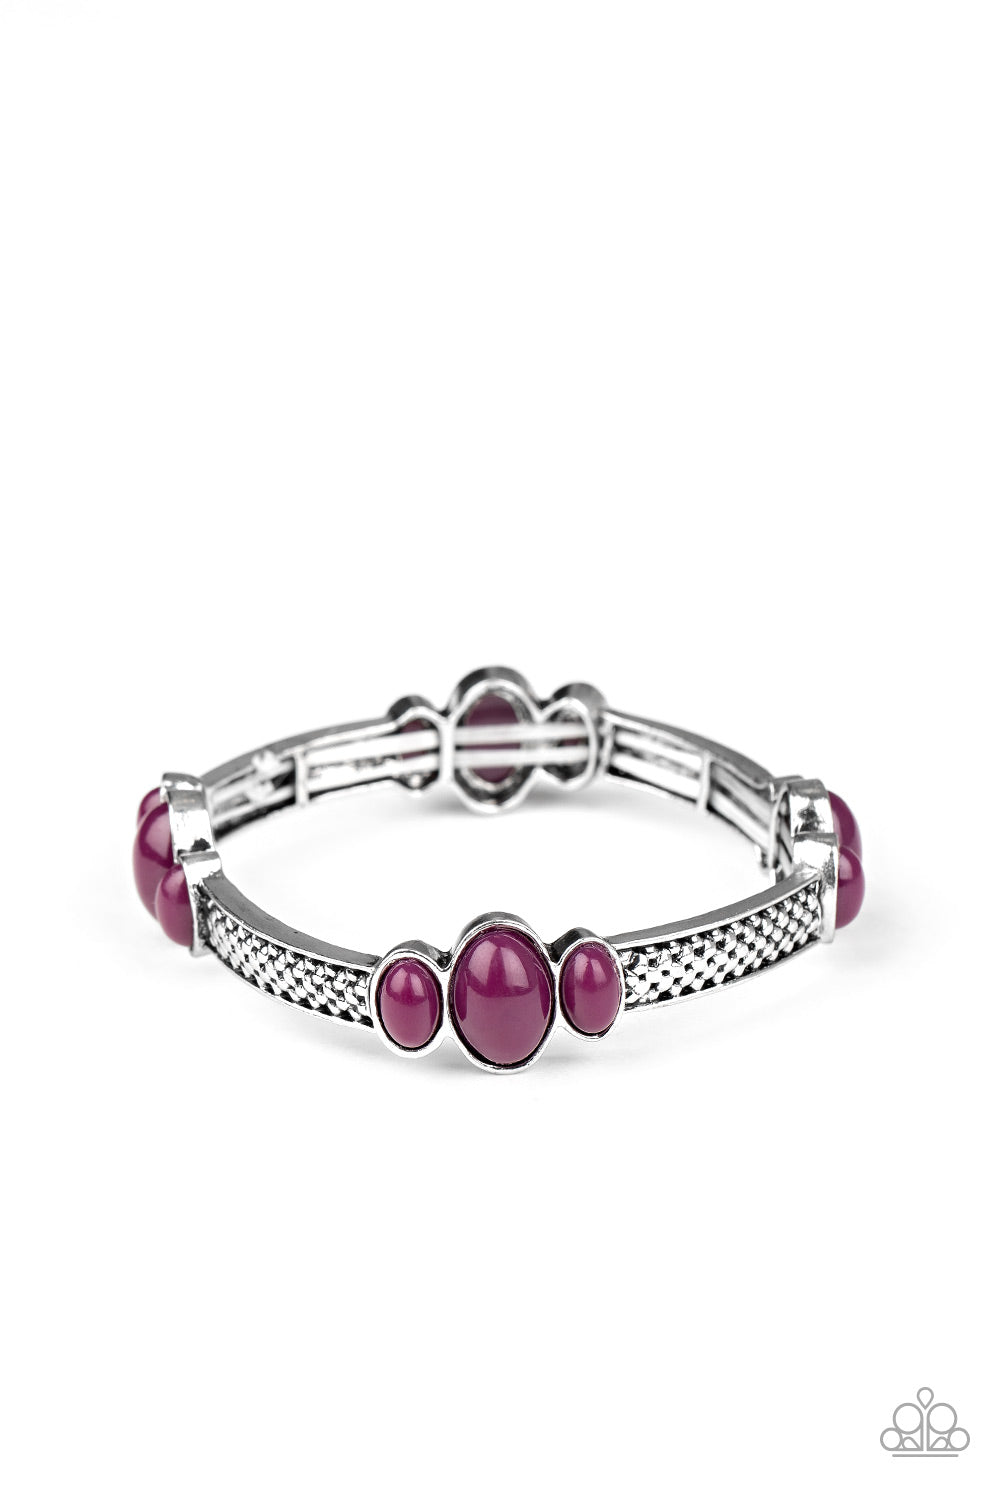 Instant Zen - Purple bracelet 1709